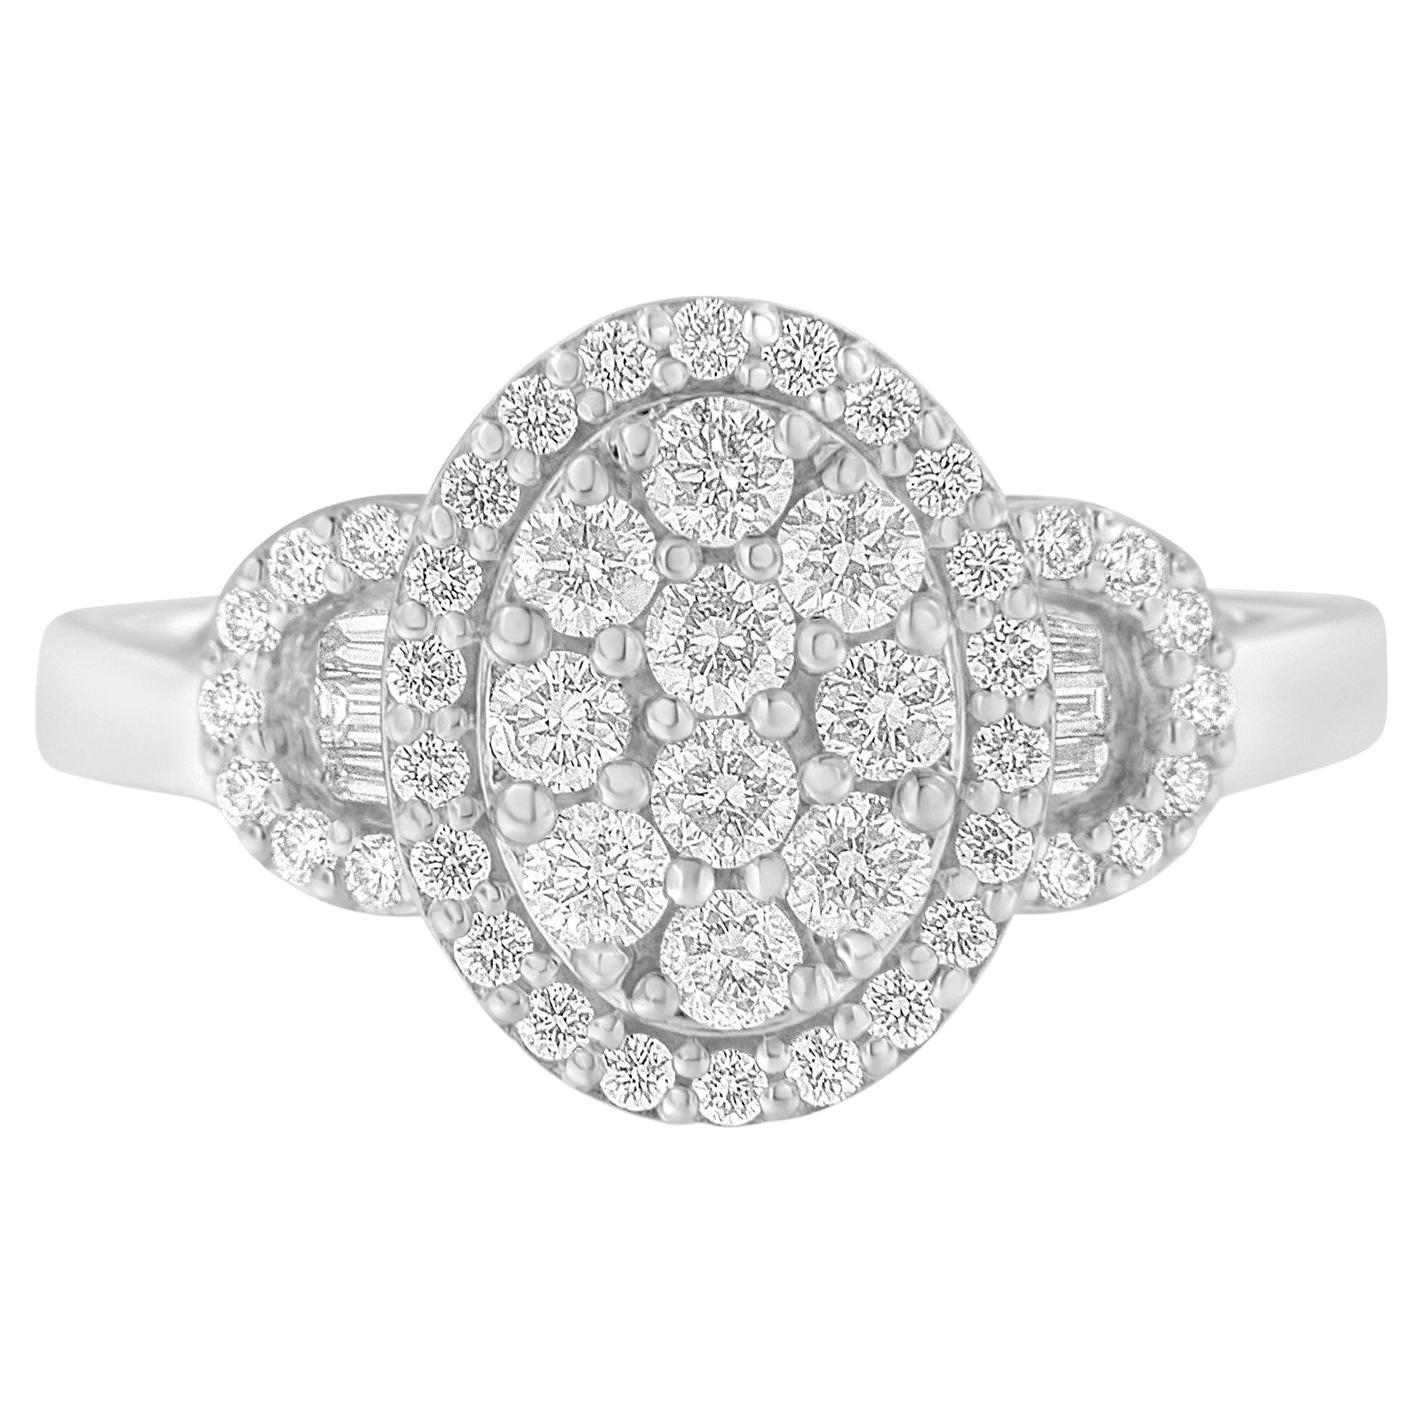 For Sale:  10K White Gold 1.0 Carat Diamond Cluster Ring